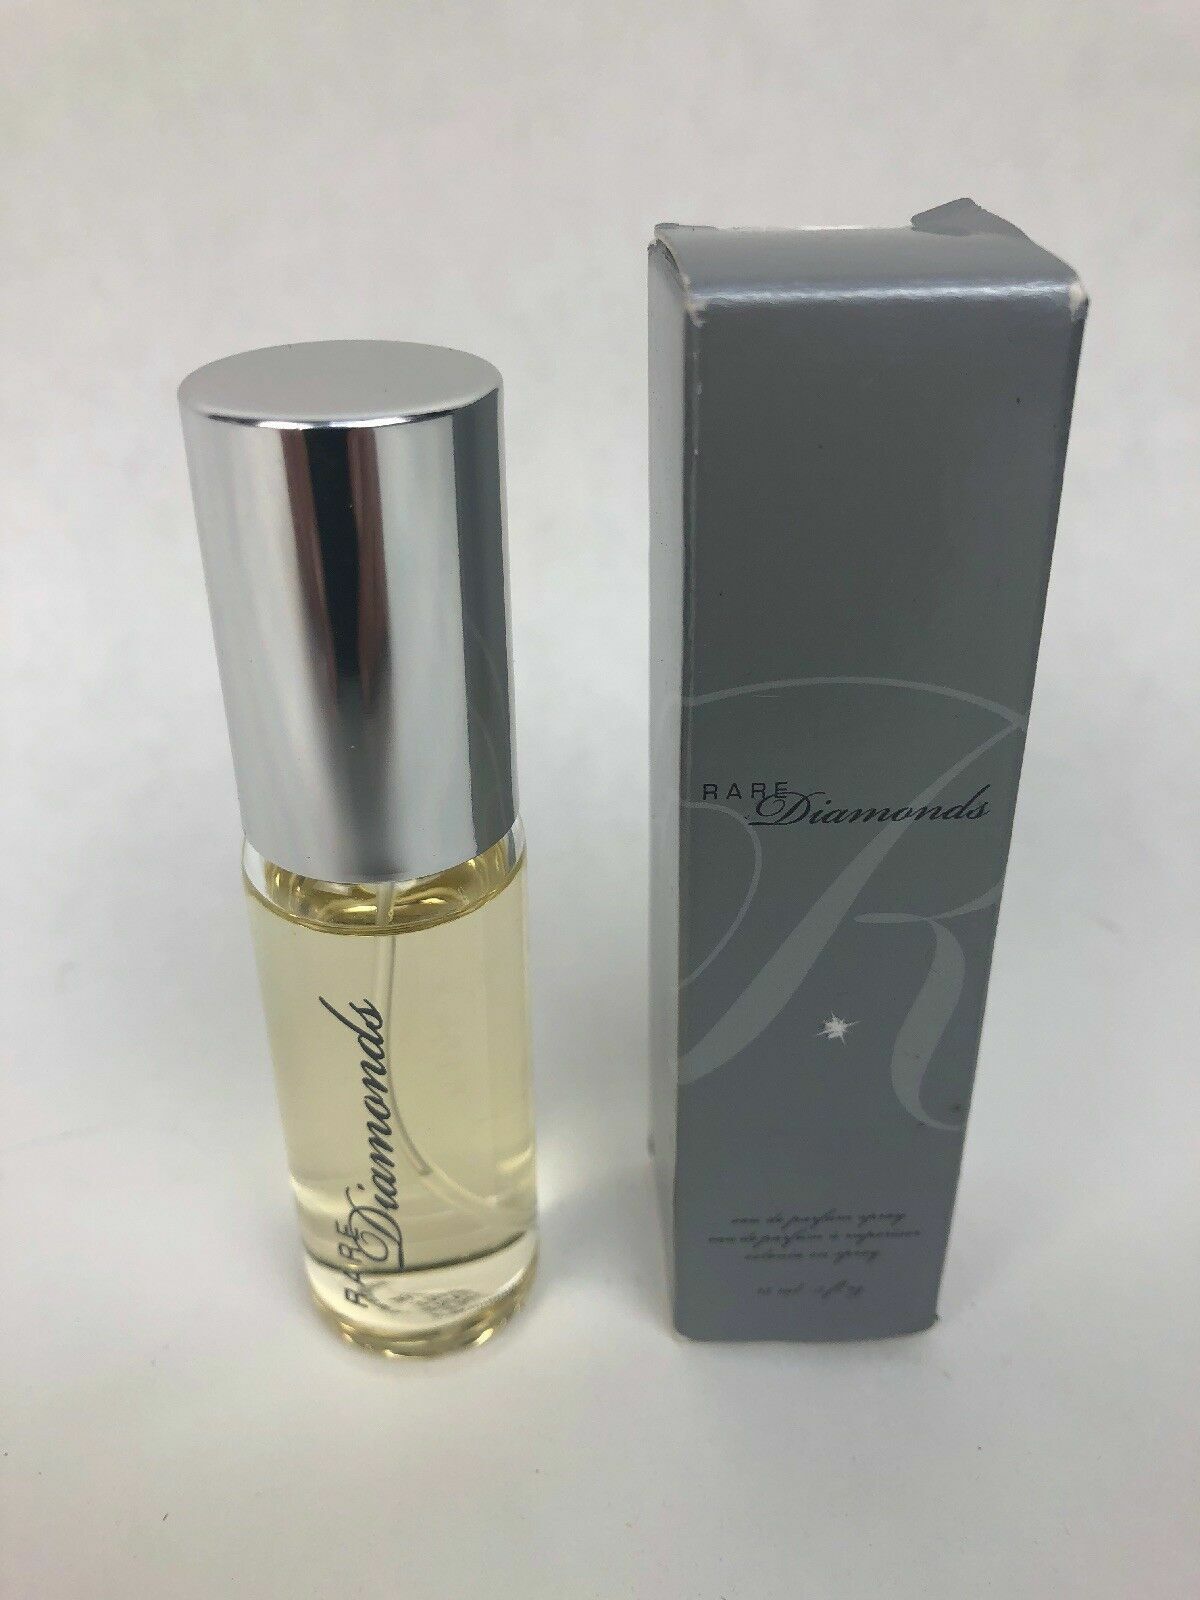 Primary image for Avon Rare Diamonds .5 fl oz Perfume spray Eau De Parfum travel size New